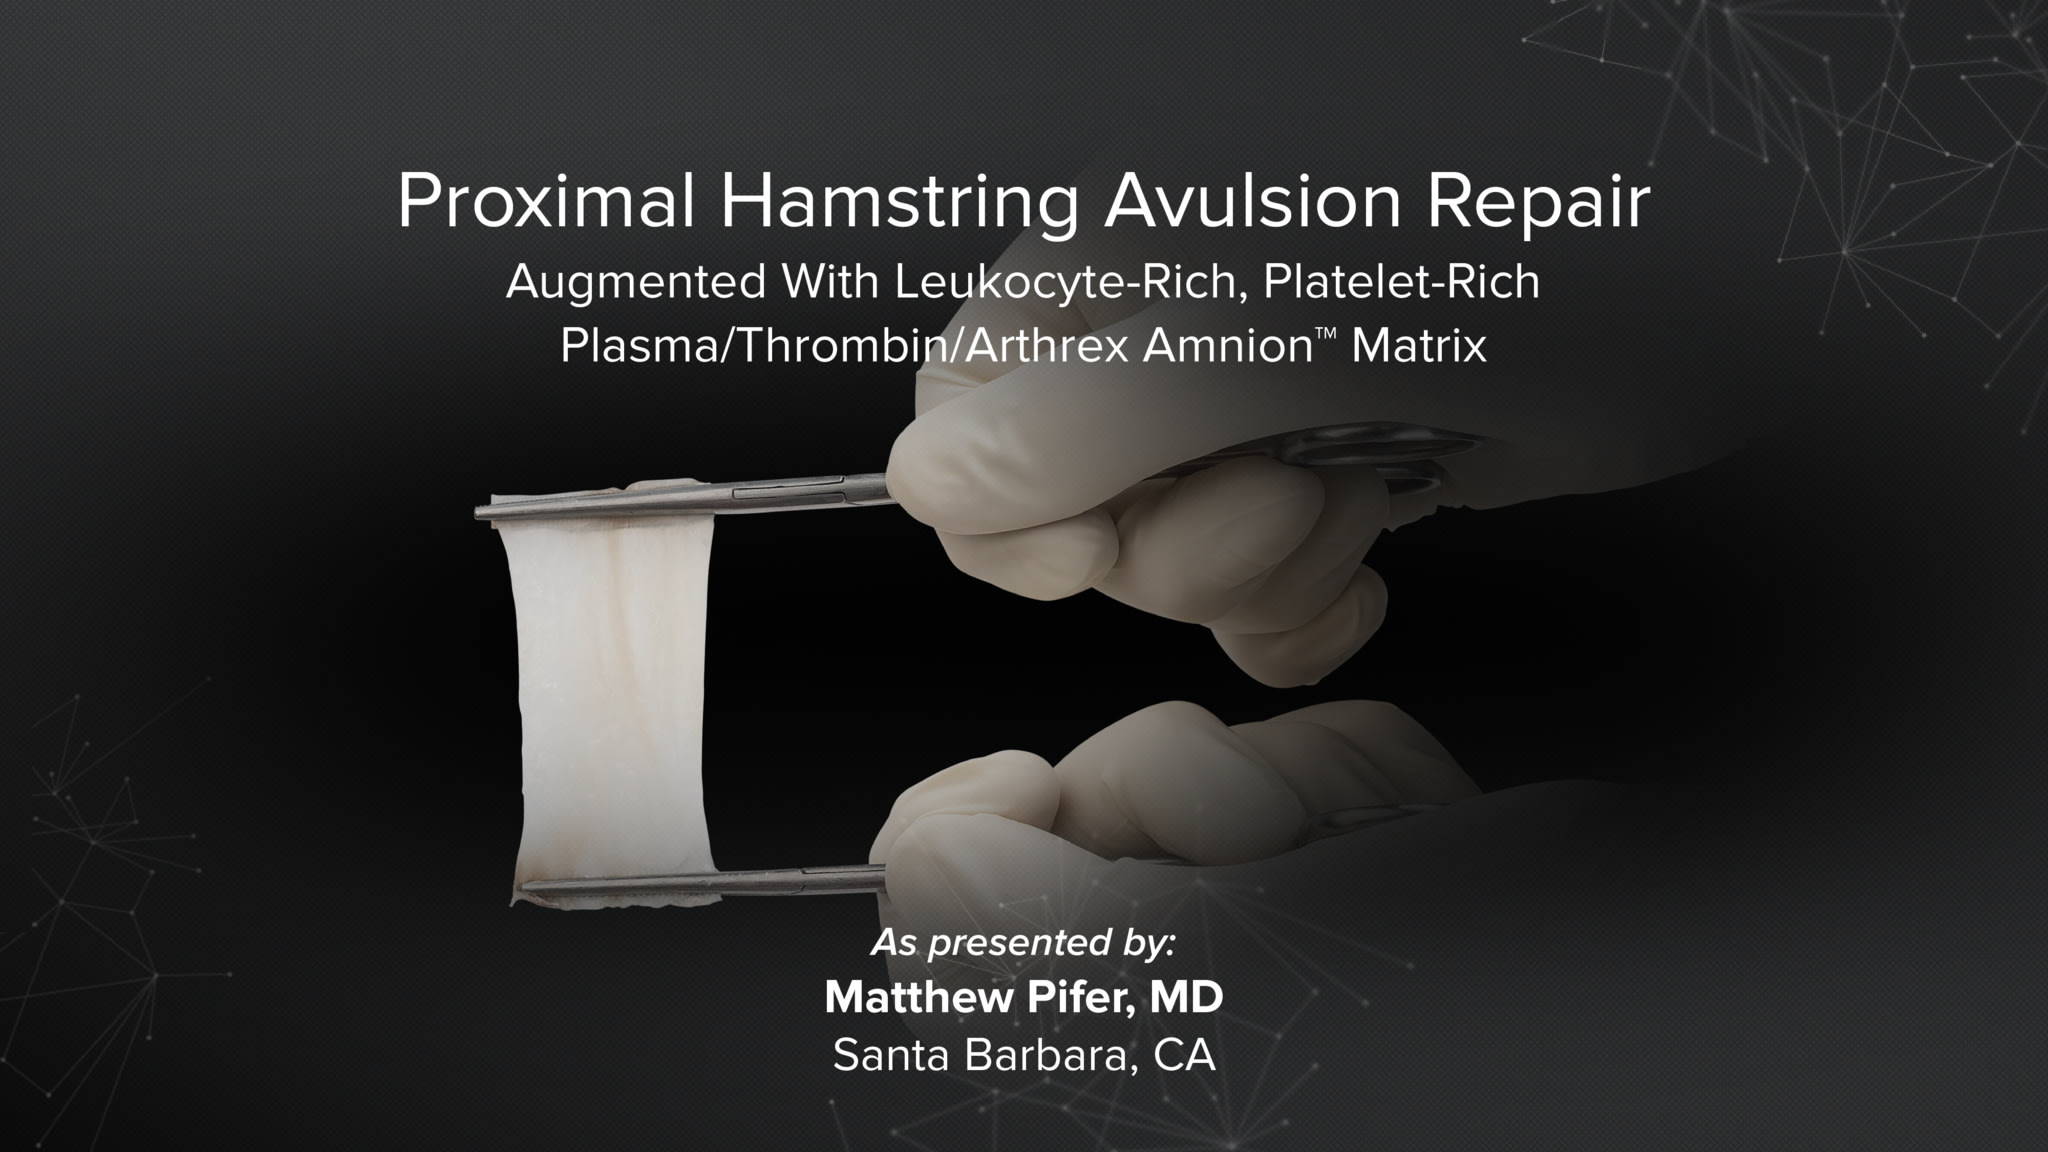 Proximal Hamstring Avulsion Repair Augmented With Arthrex Amnion™ Matrix